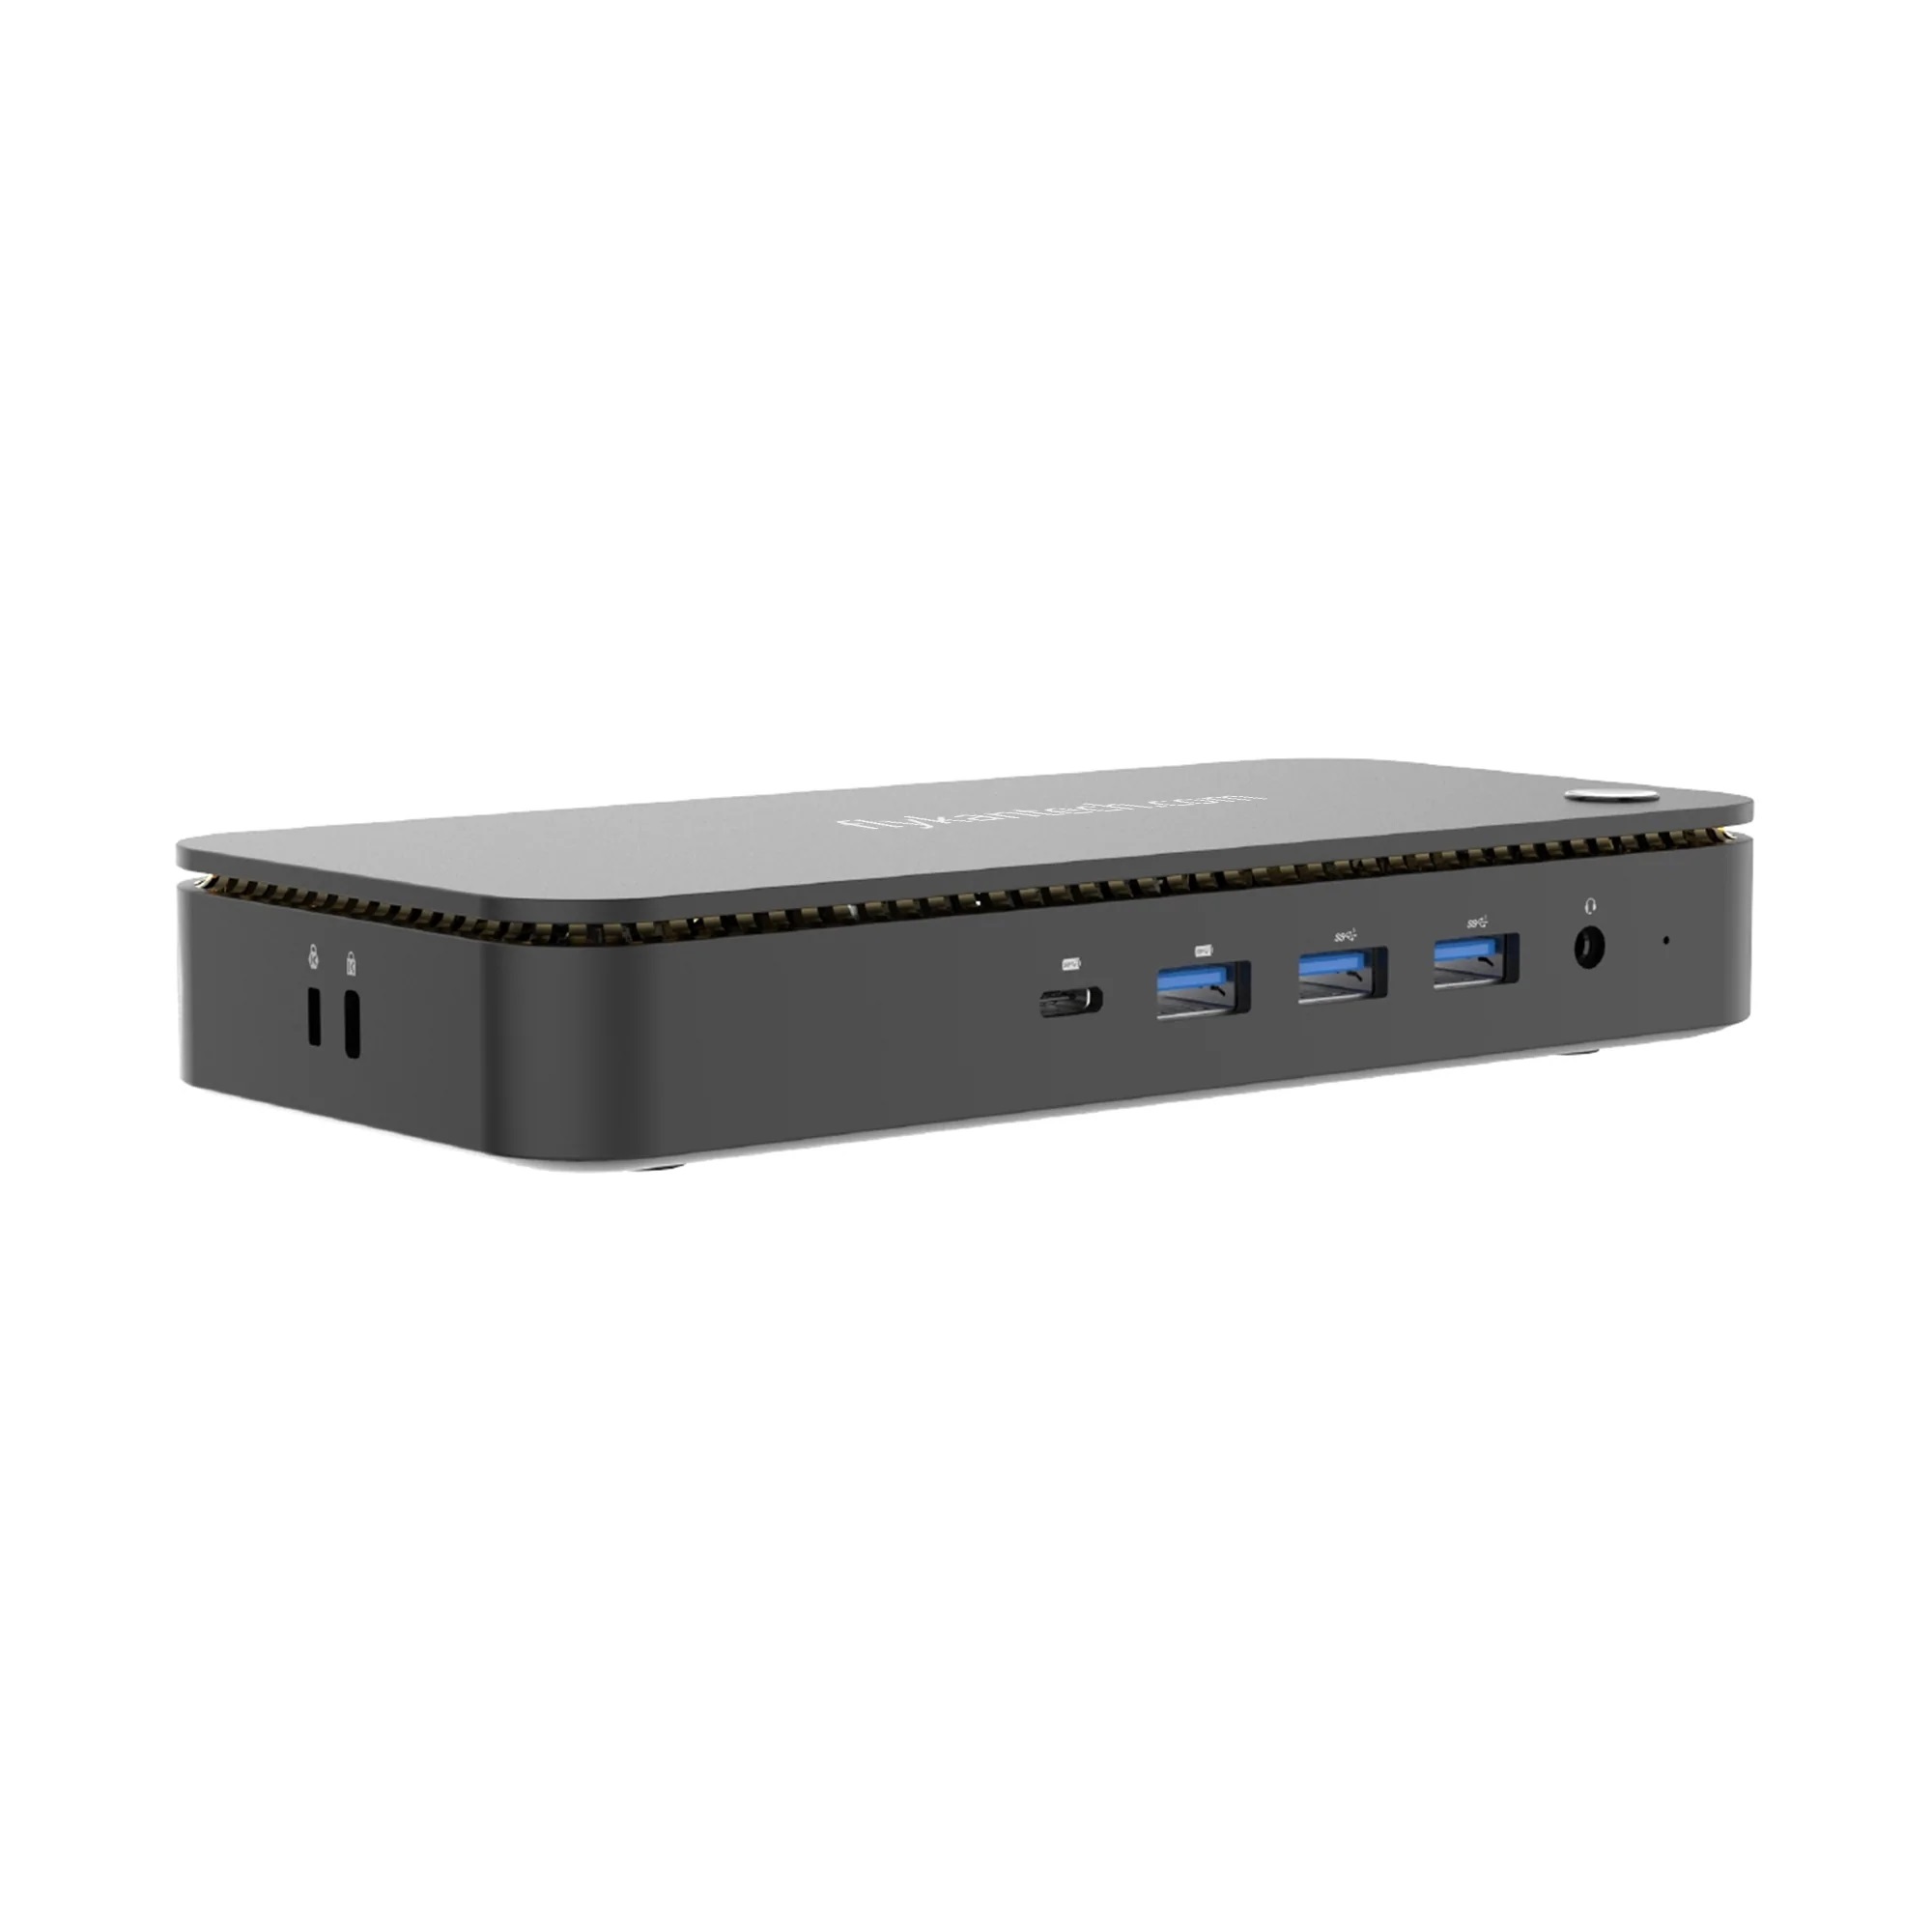 ДК1189 | Док-станция USB Type-C с тремя мониторами 4K — альтернативный режим DP 1.4 и DSC, 2x DisplayPort 1.4/HDMI 2.0